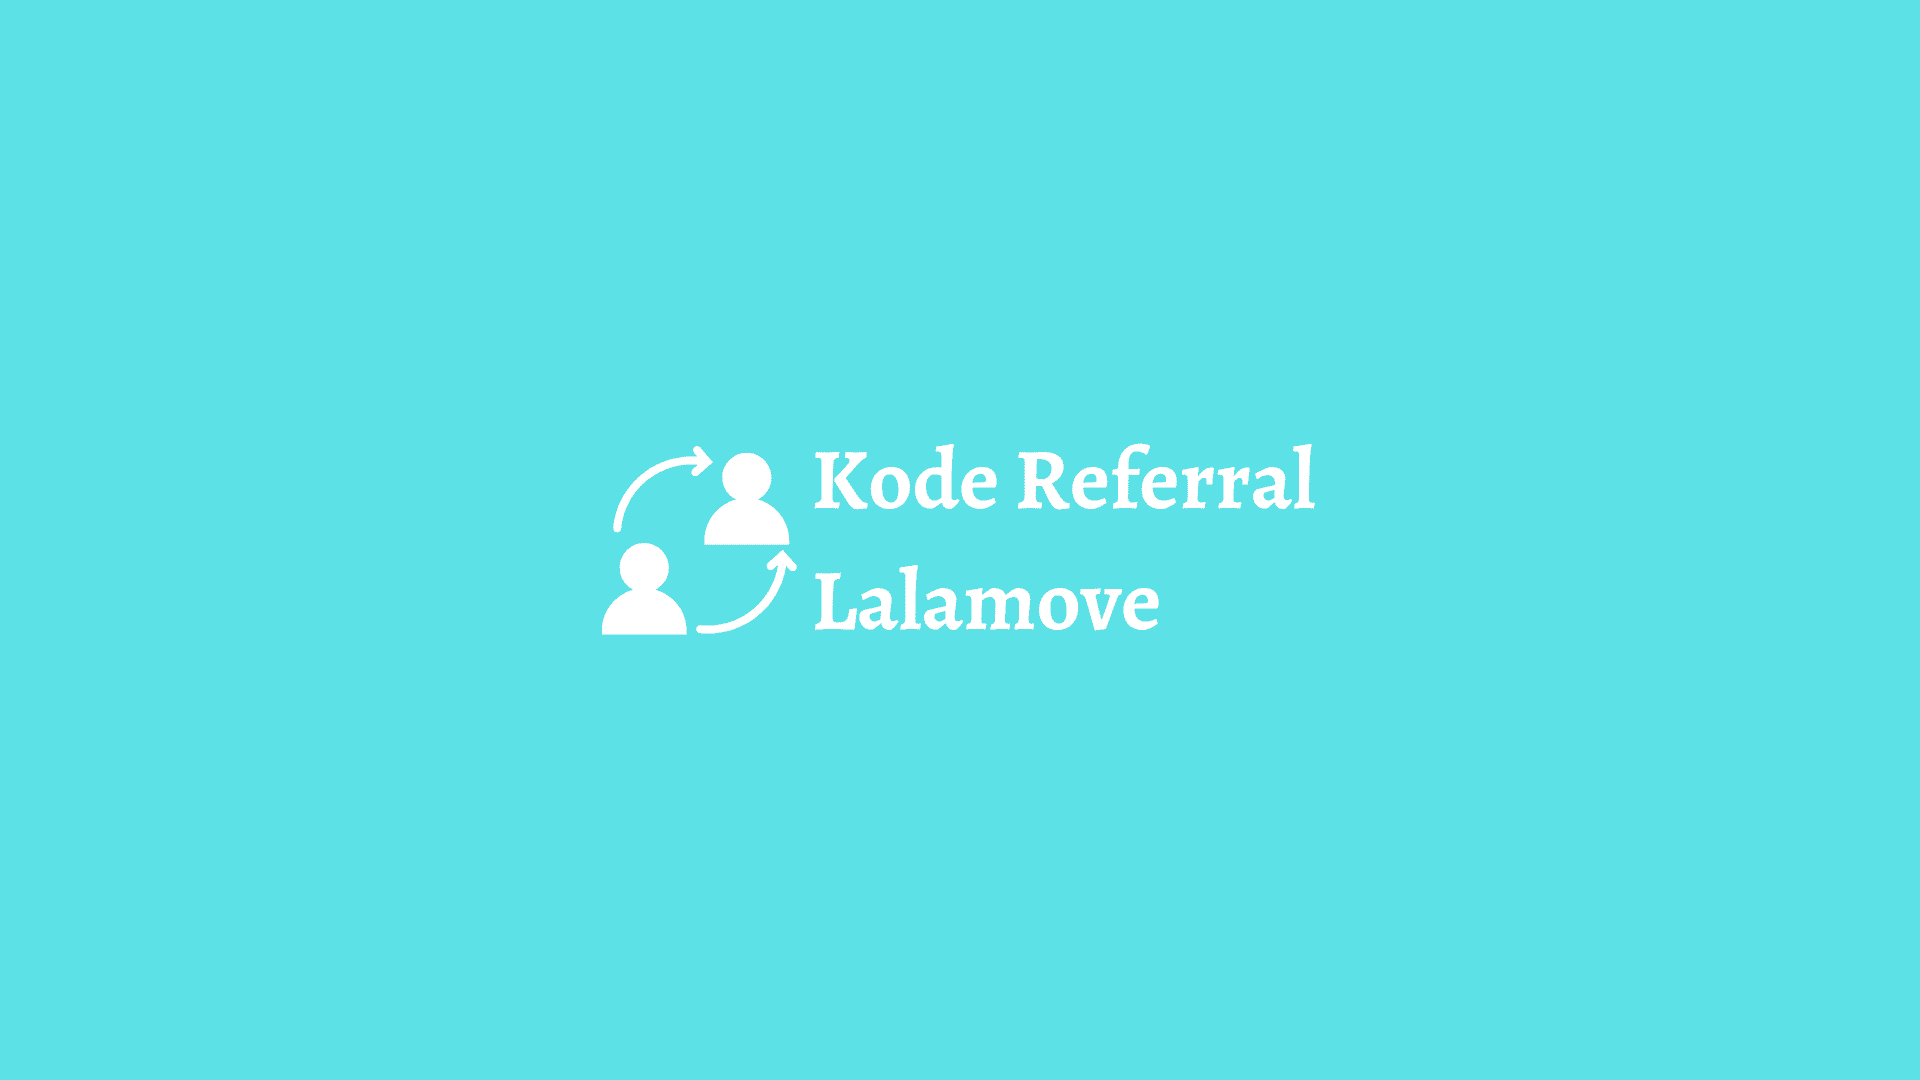 kode referral lalamove